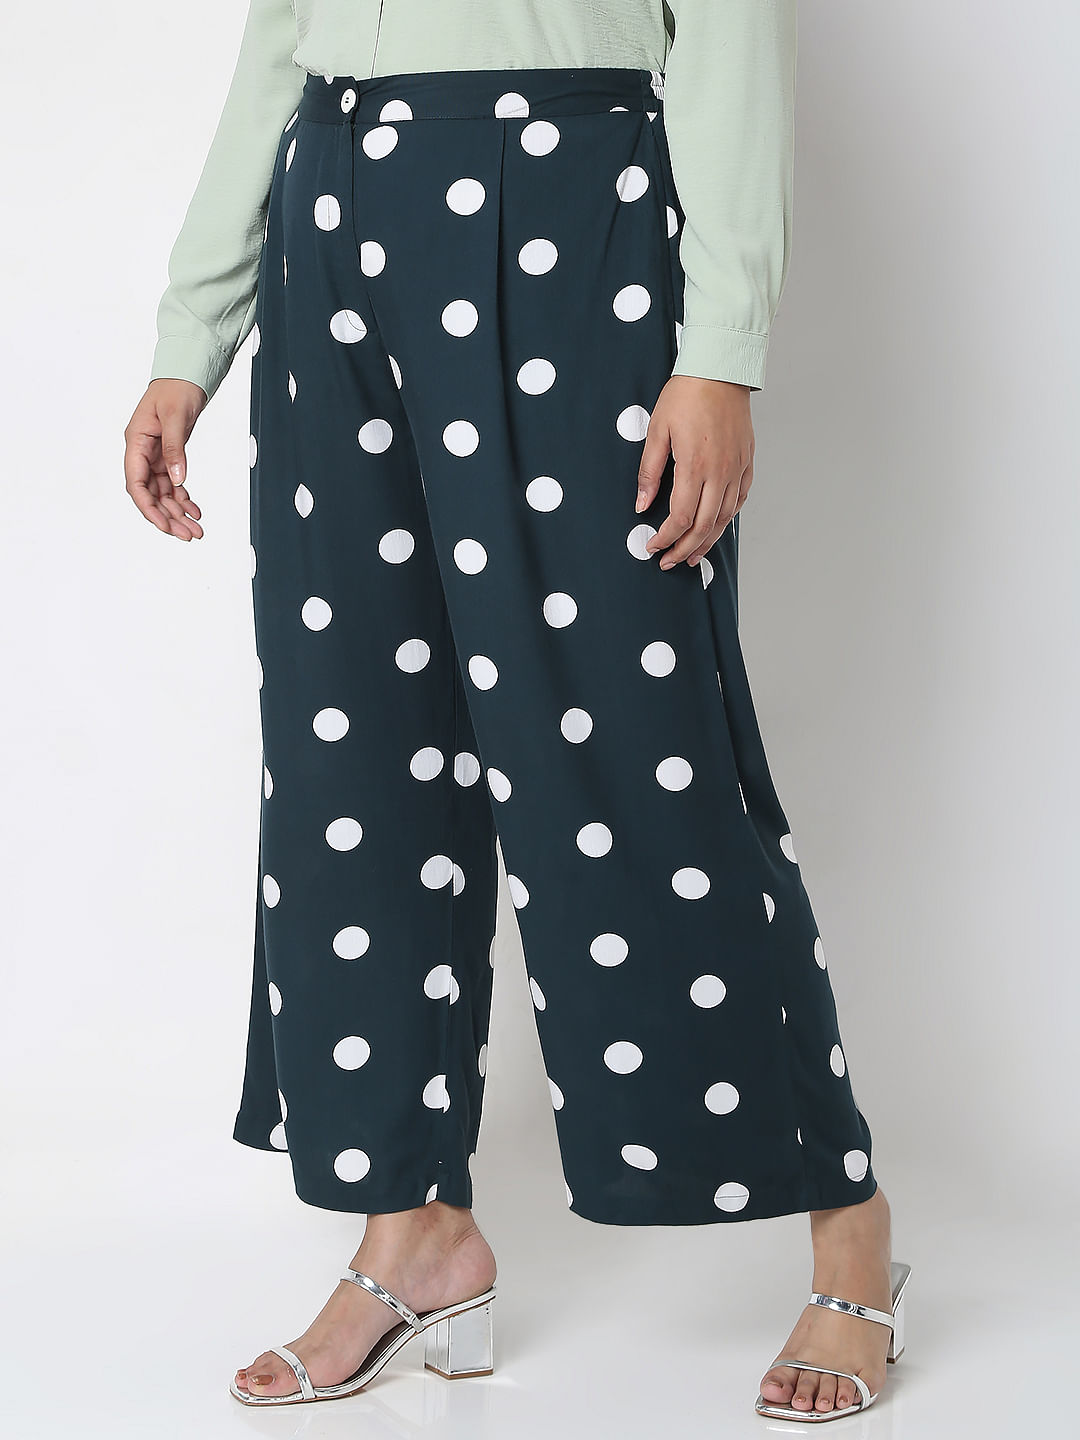 Black And White Polka Dot Pants | ShopStyle